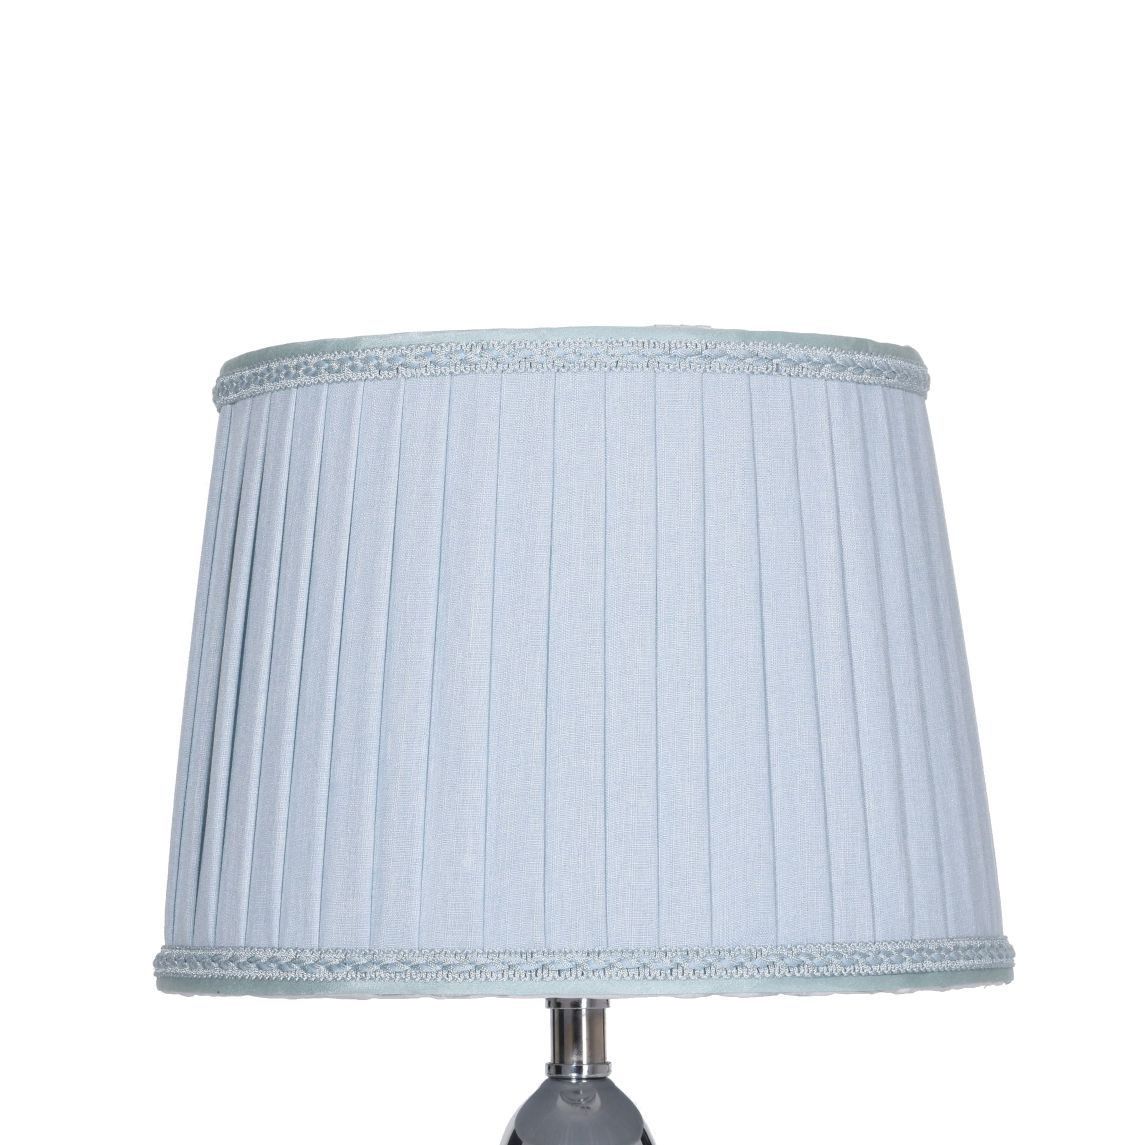 Fabric Light Blue Table Lamp Shade إنارات, Pale Blue Table Lamp